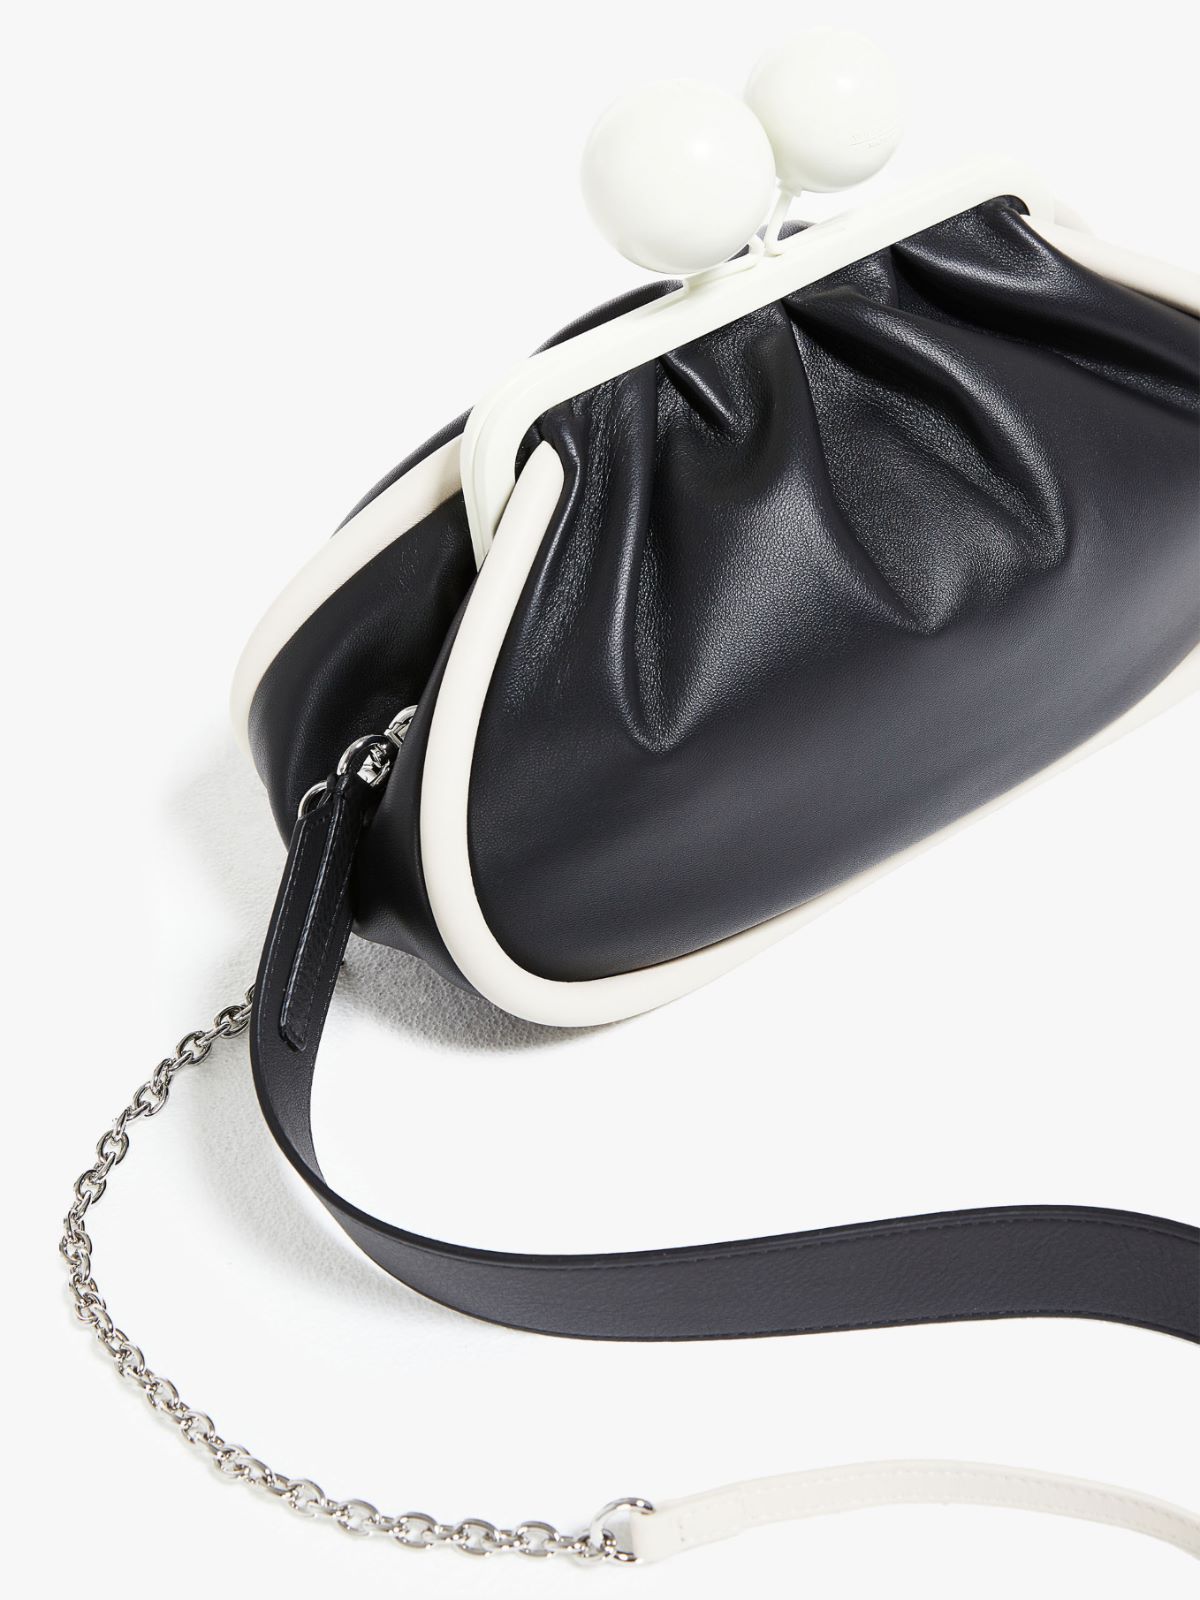 Medium Pasticcino Bag in nappa leather - BLACK - Weekend Max Mara - 4